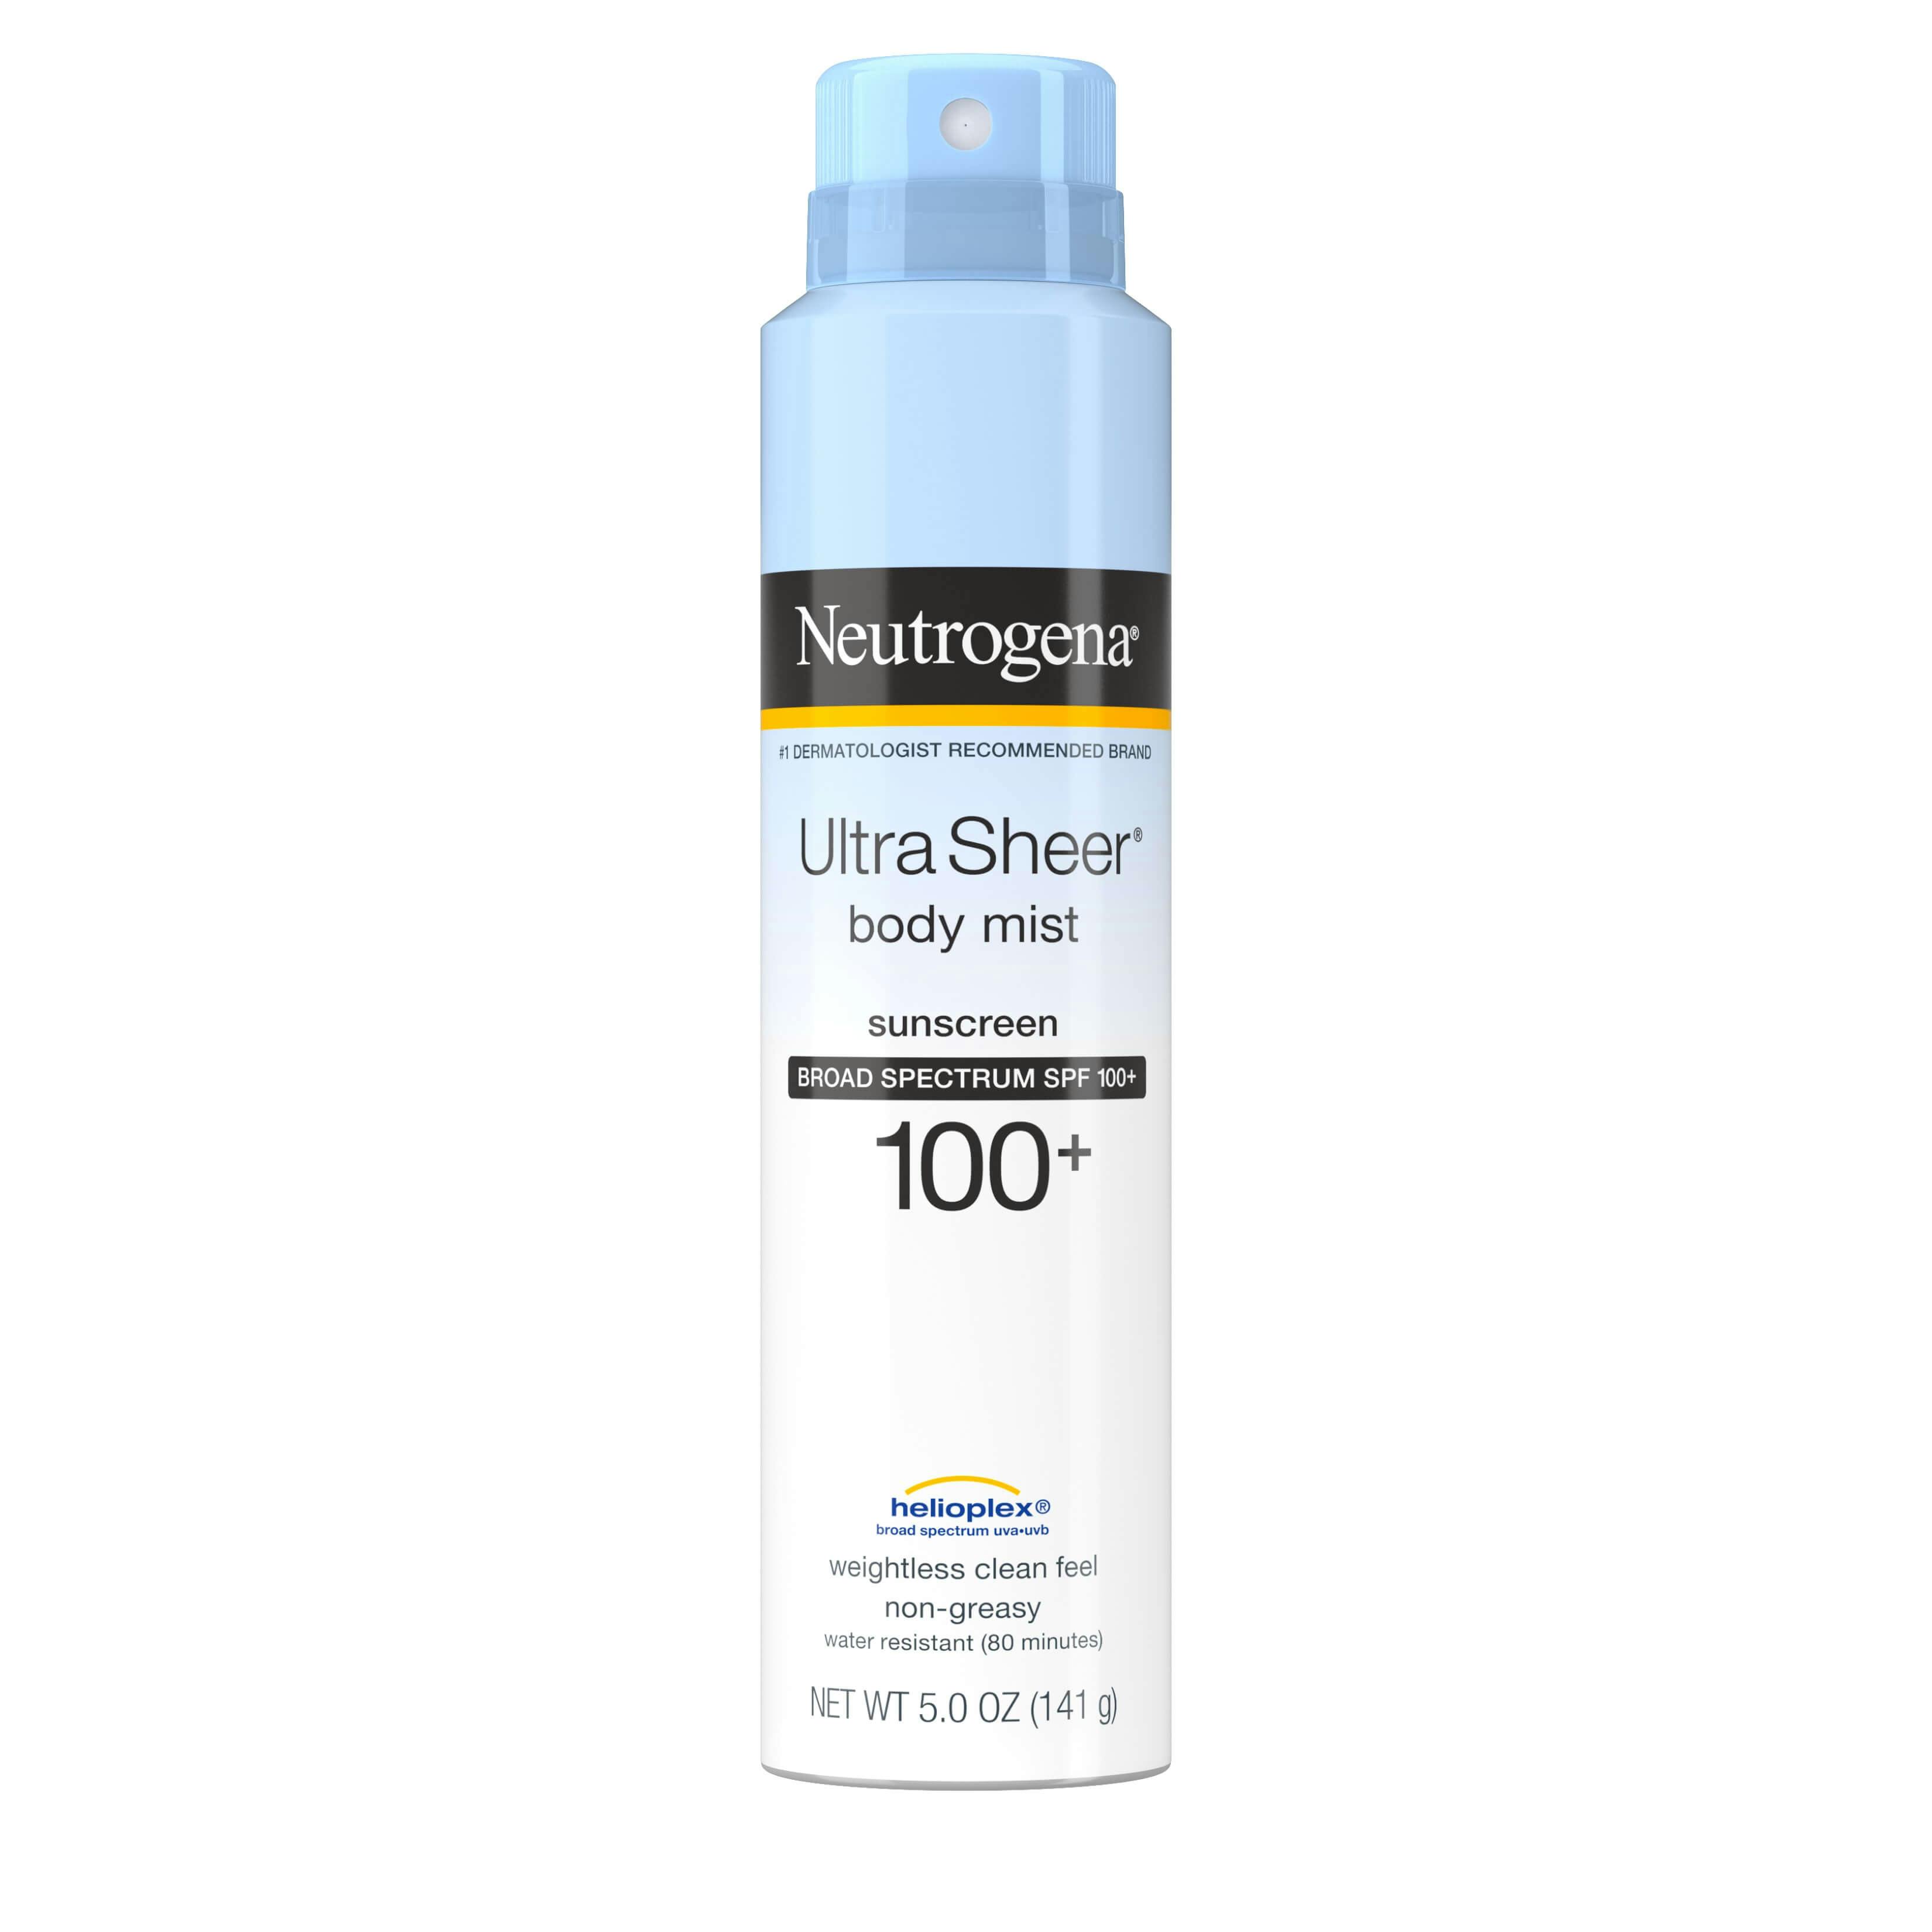 baby sunscreen spf 100